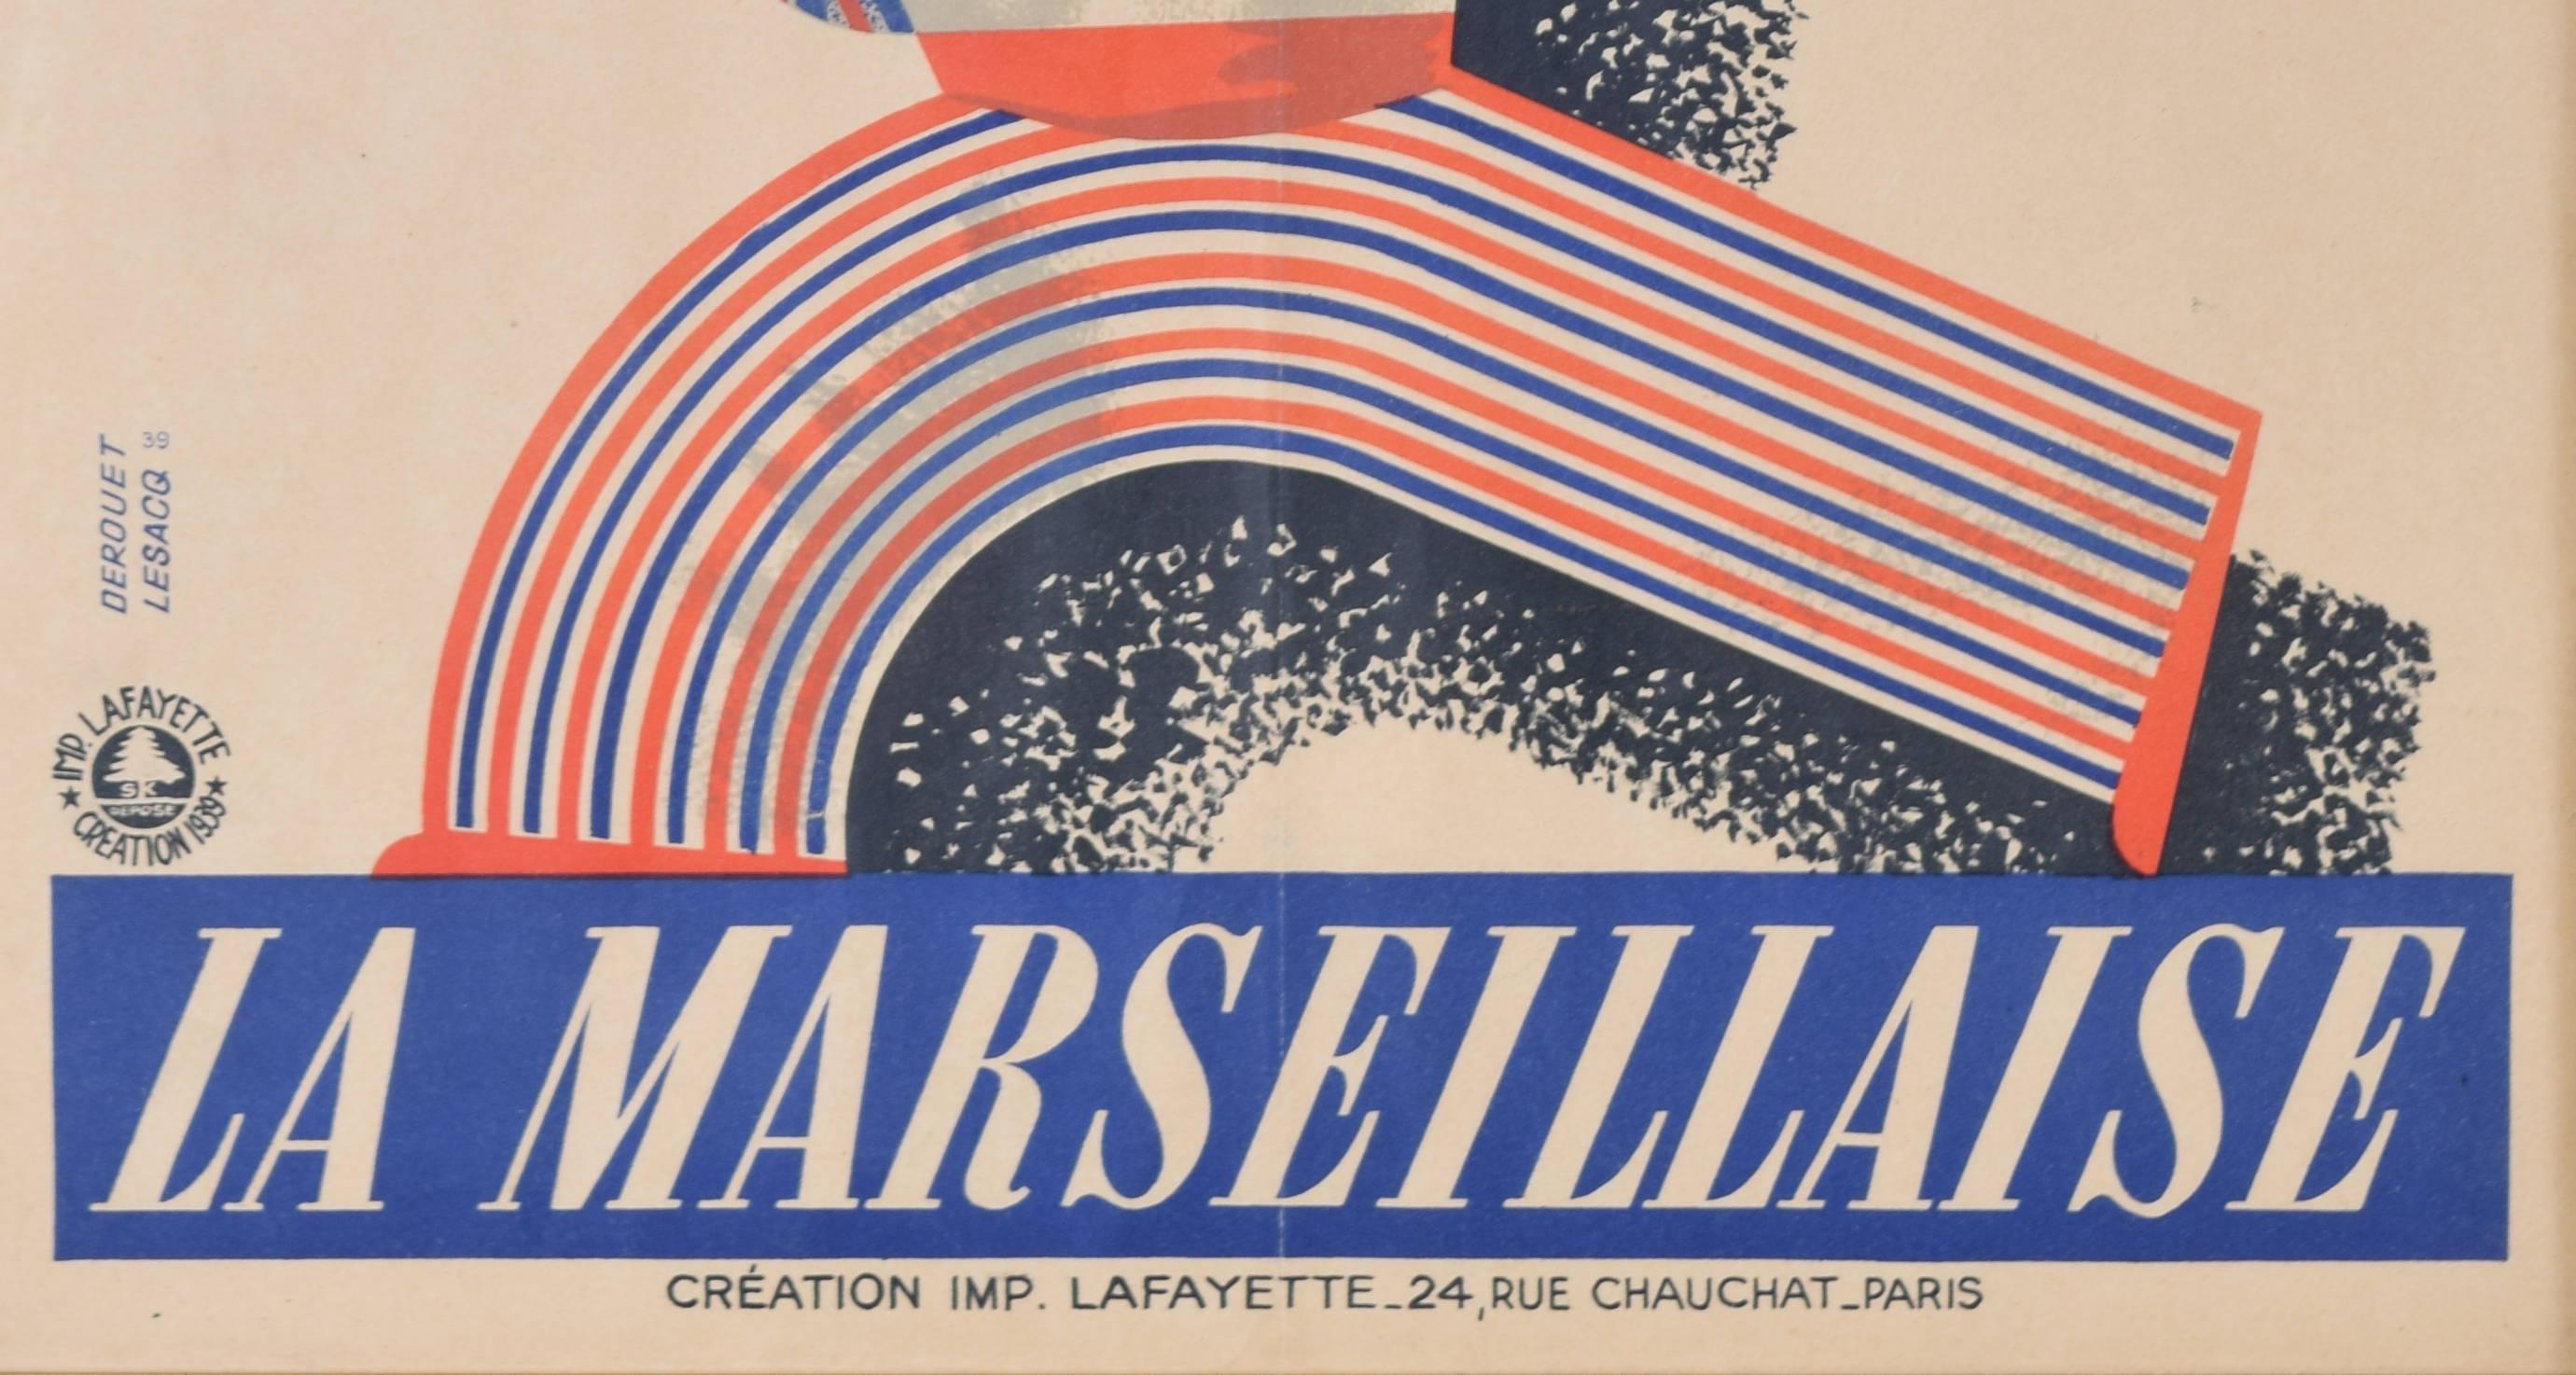 Loterie Nationale La Marseillaise original vintage poster by Edgard Derouet For Sale 3